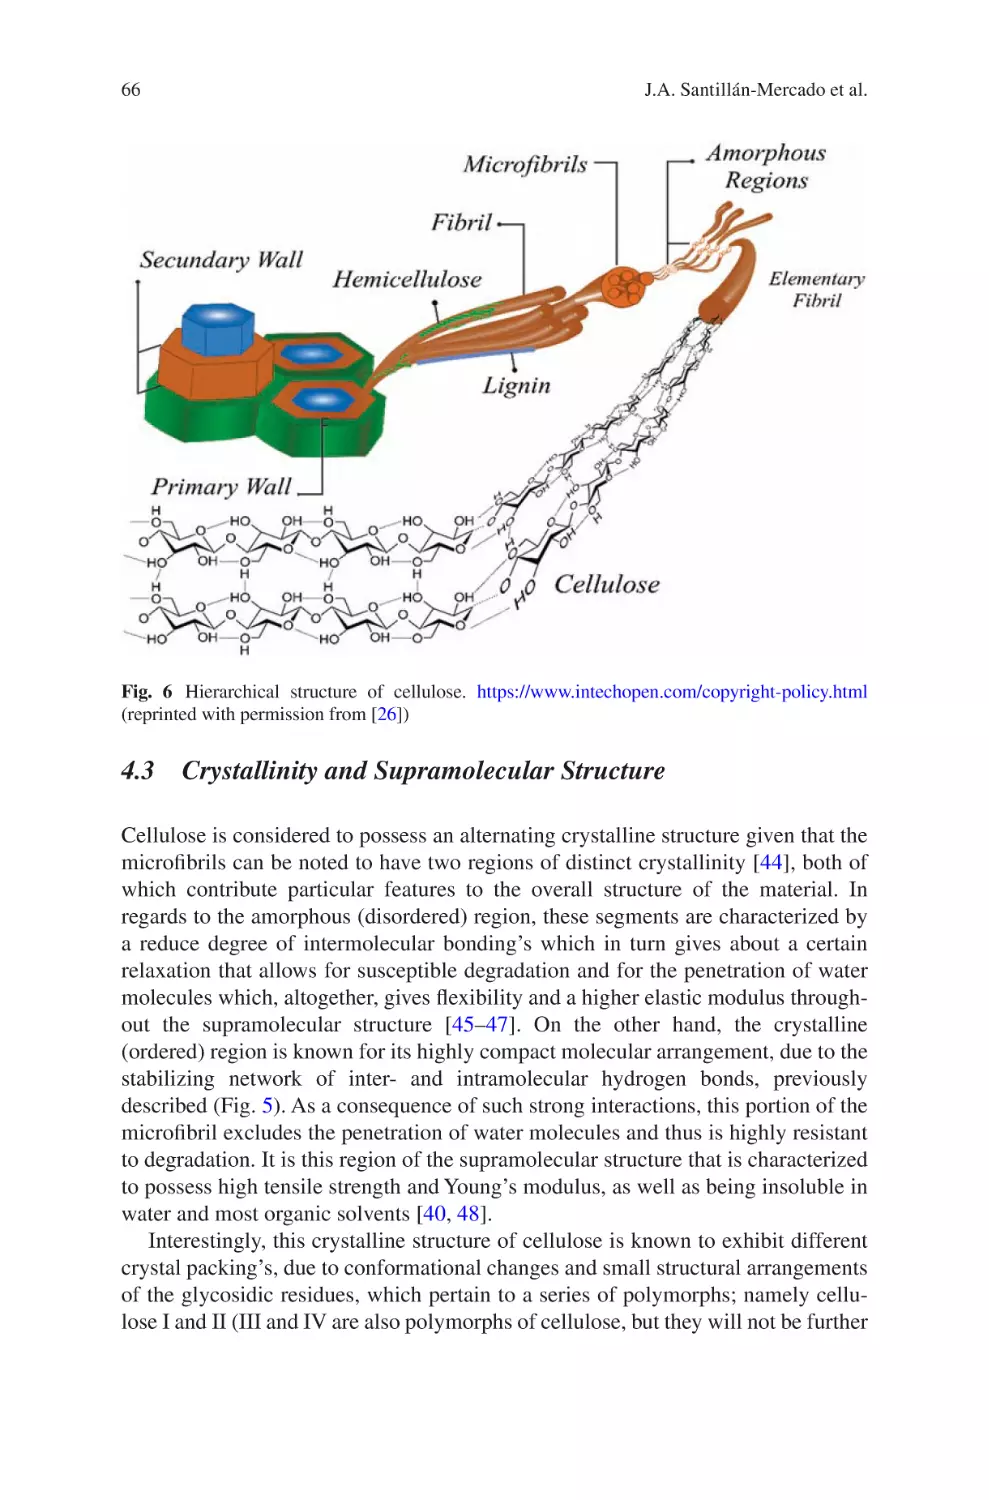 4.3 Crystallinity and Supramolecular Structure